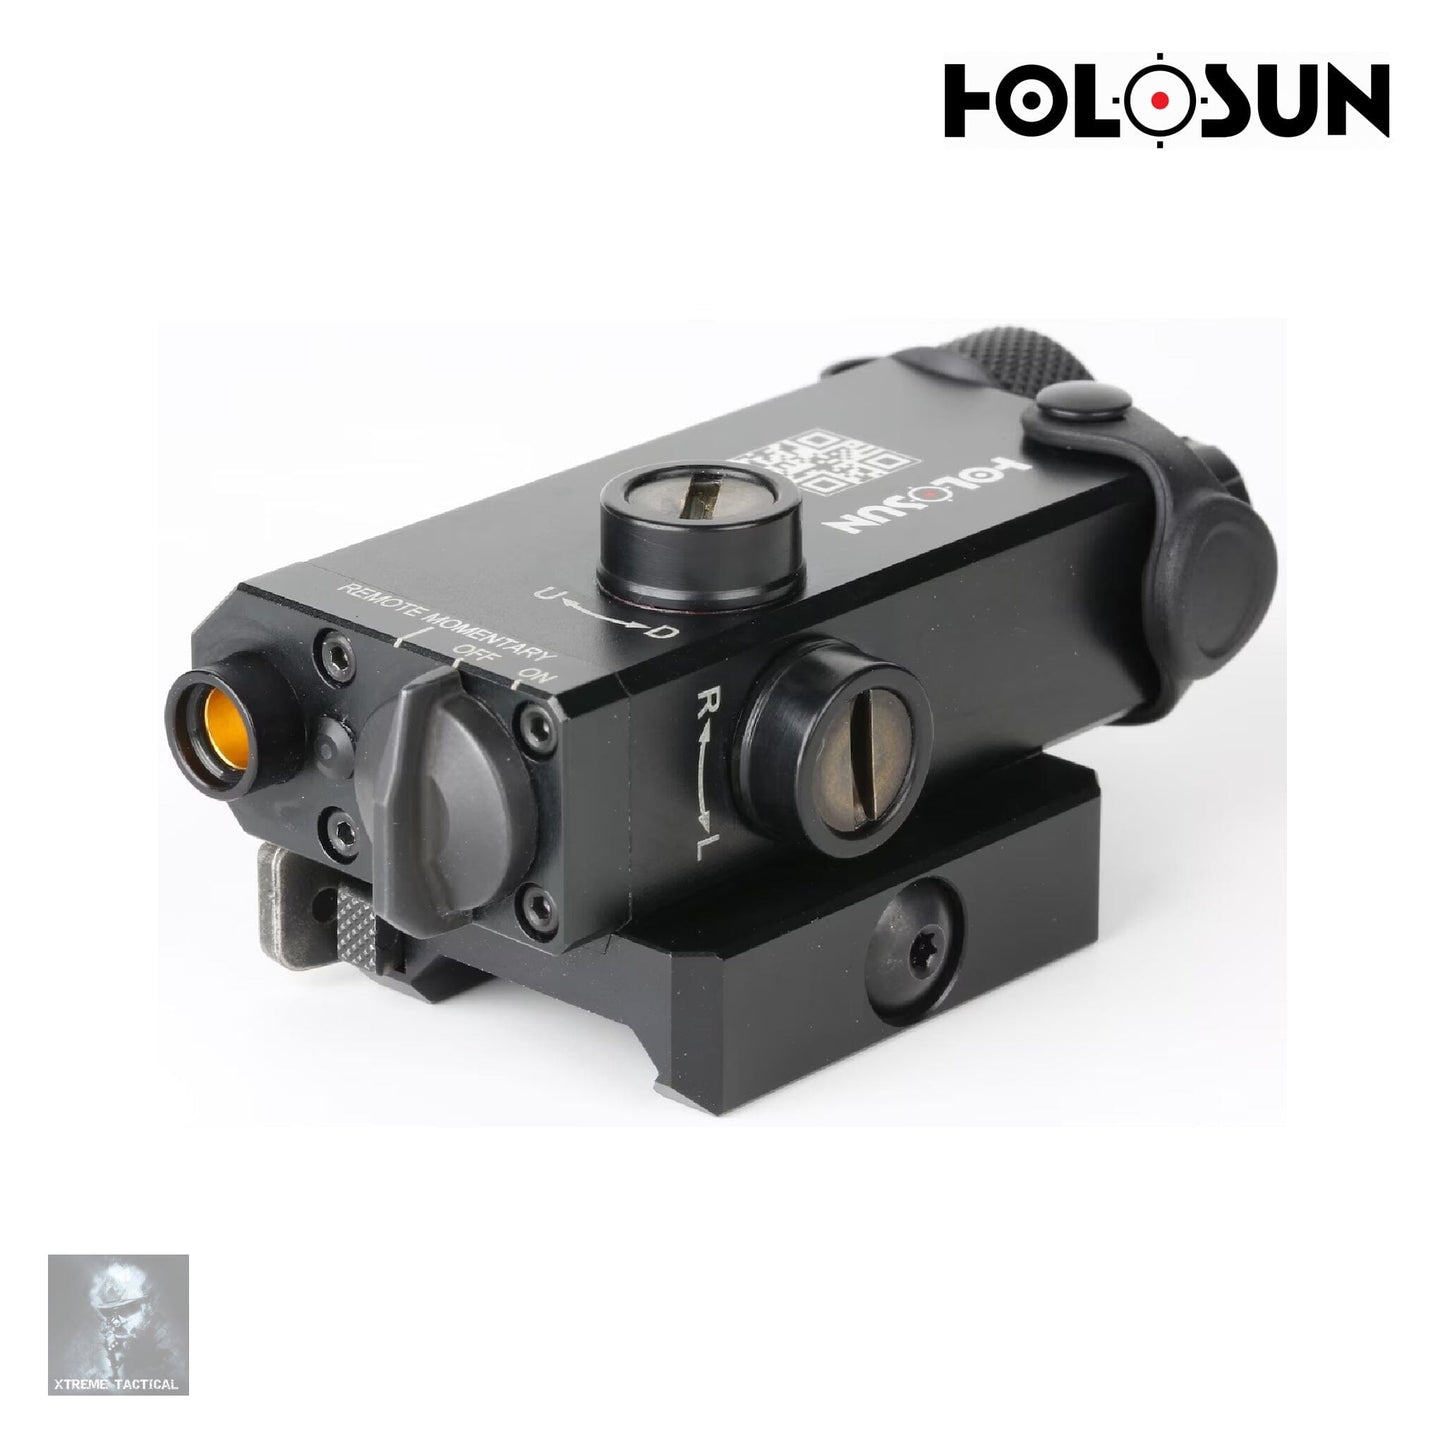 Holosun LS117G Green Laser Sight Weapon Laser Device Holosun Technologies 